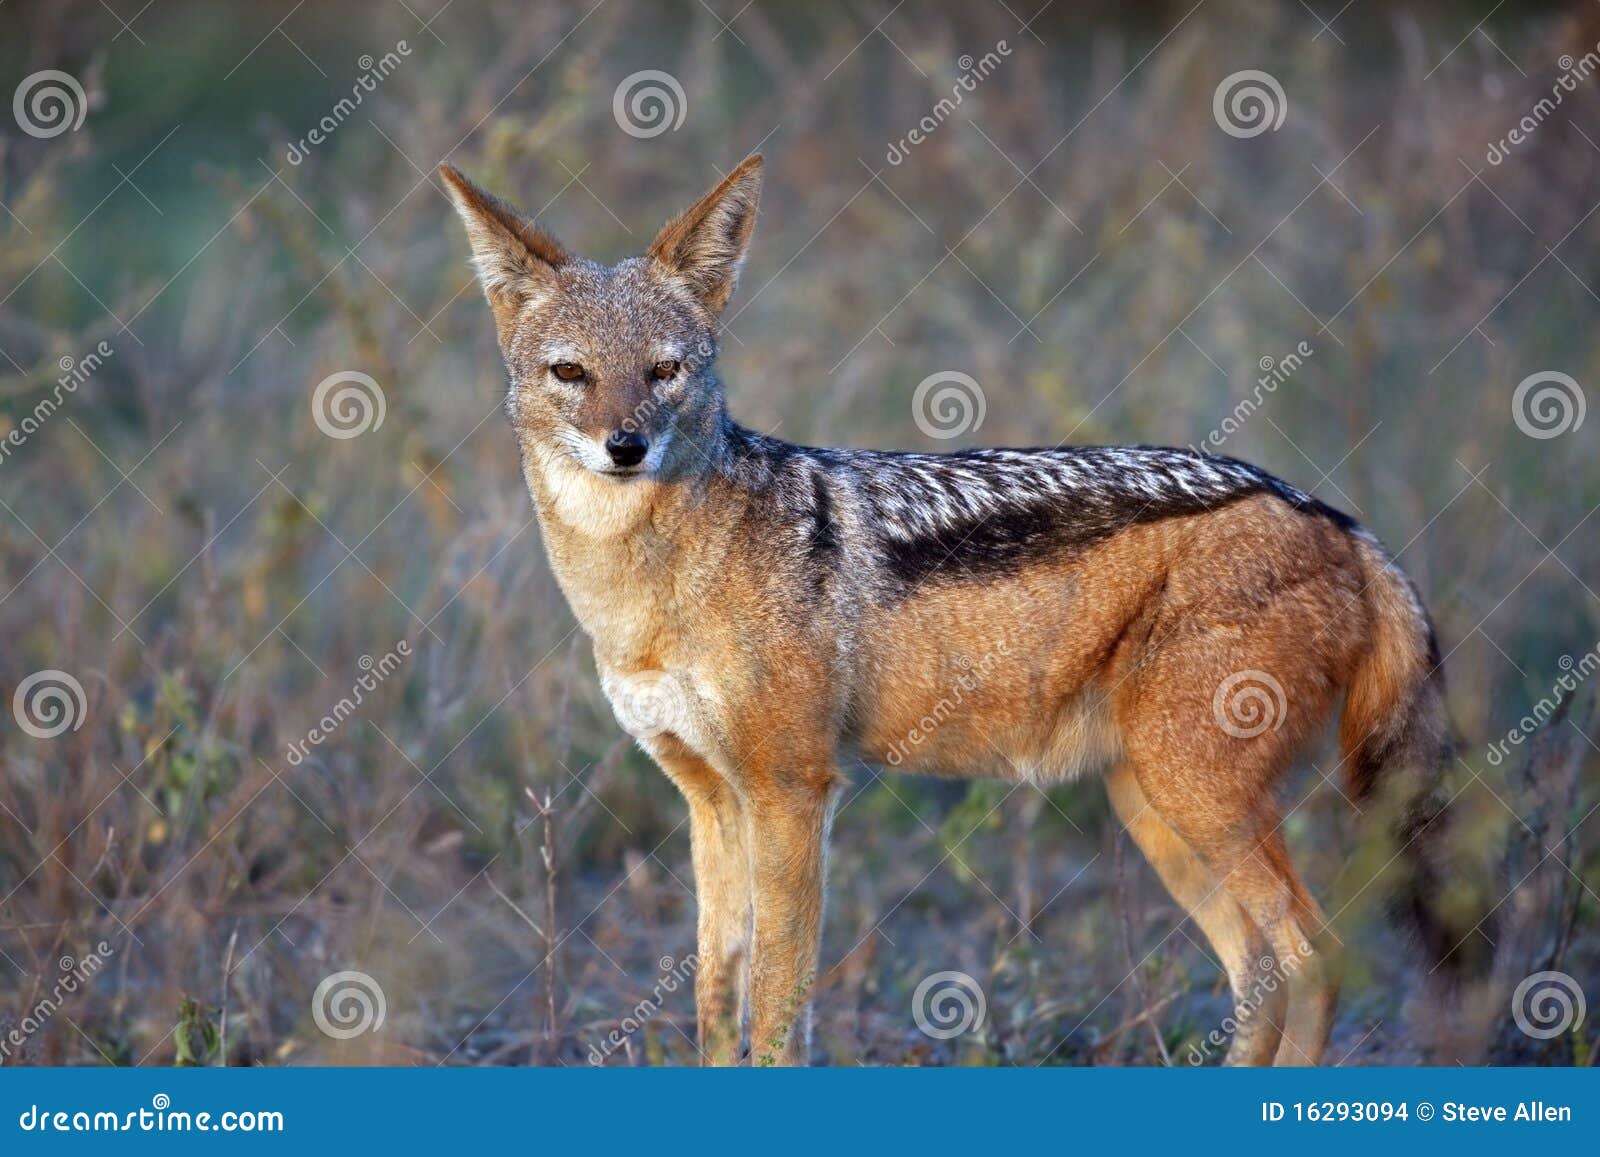 jackal - alpha male - botswana